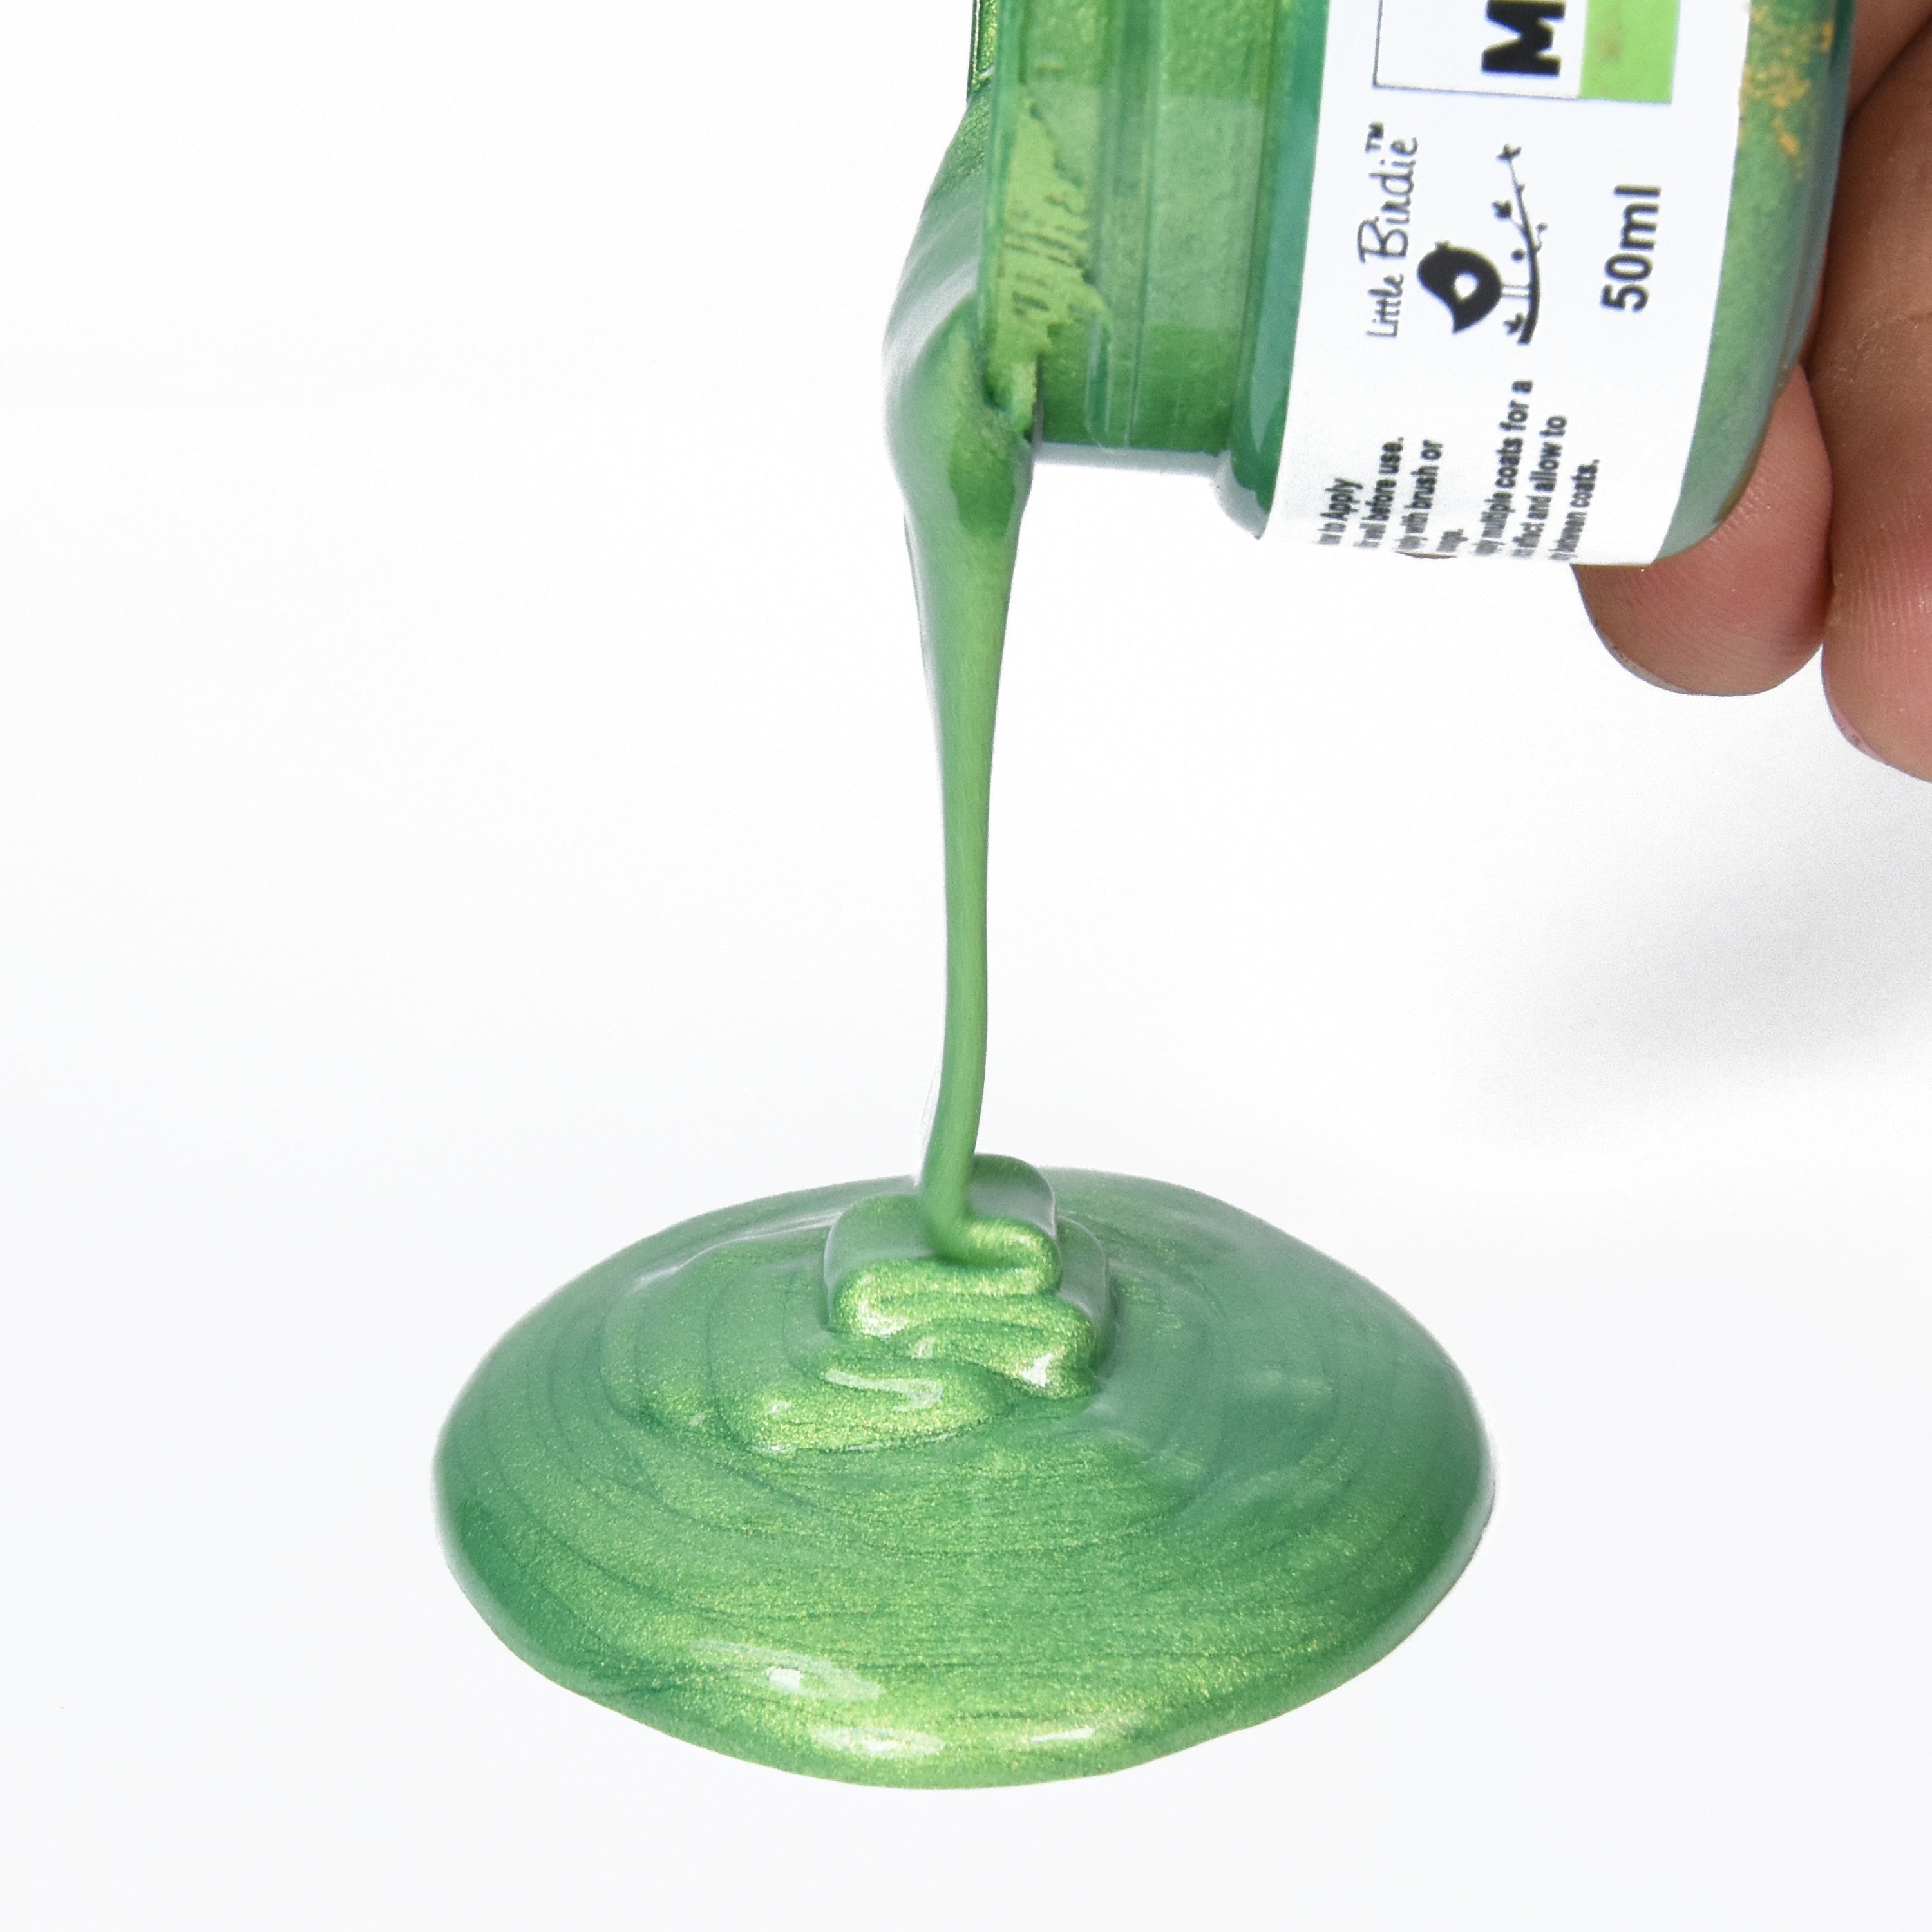 Tinted Metallic Paint Lime Crush 50Ml Bottle Lb - VC